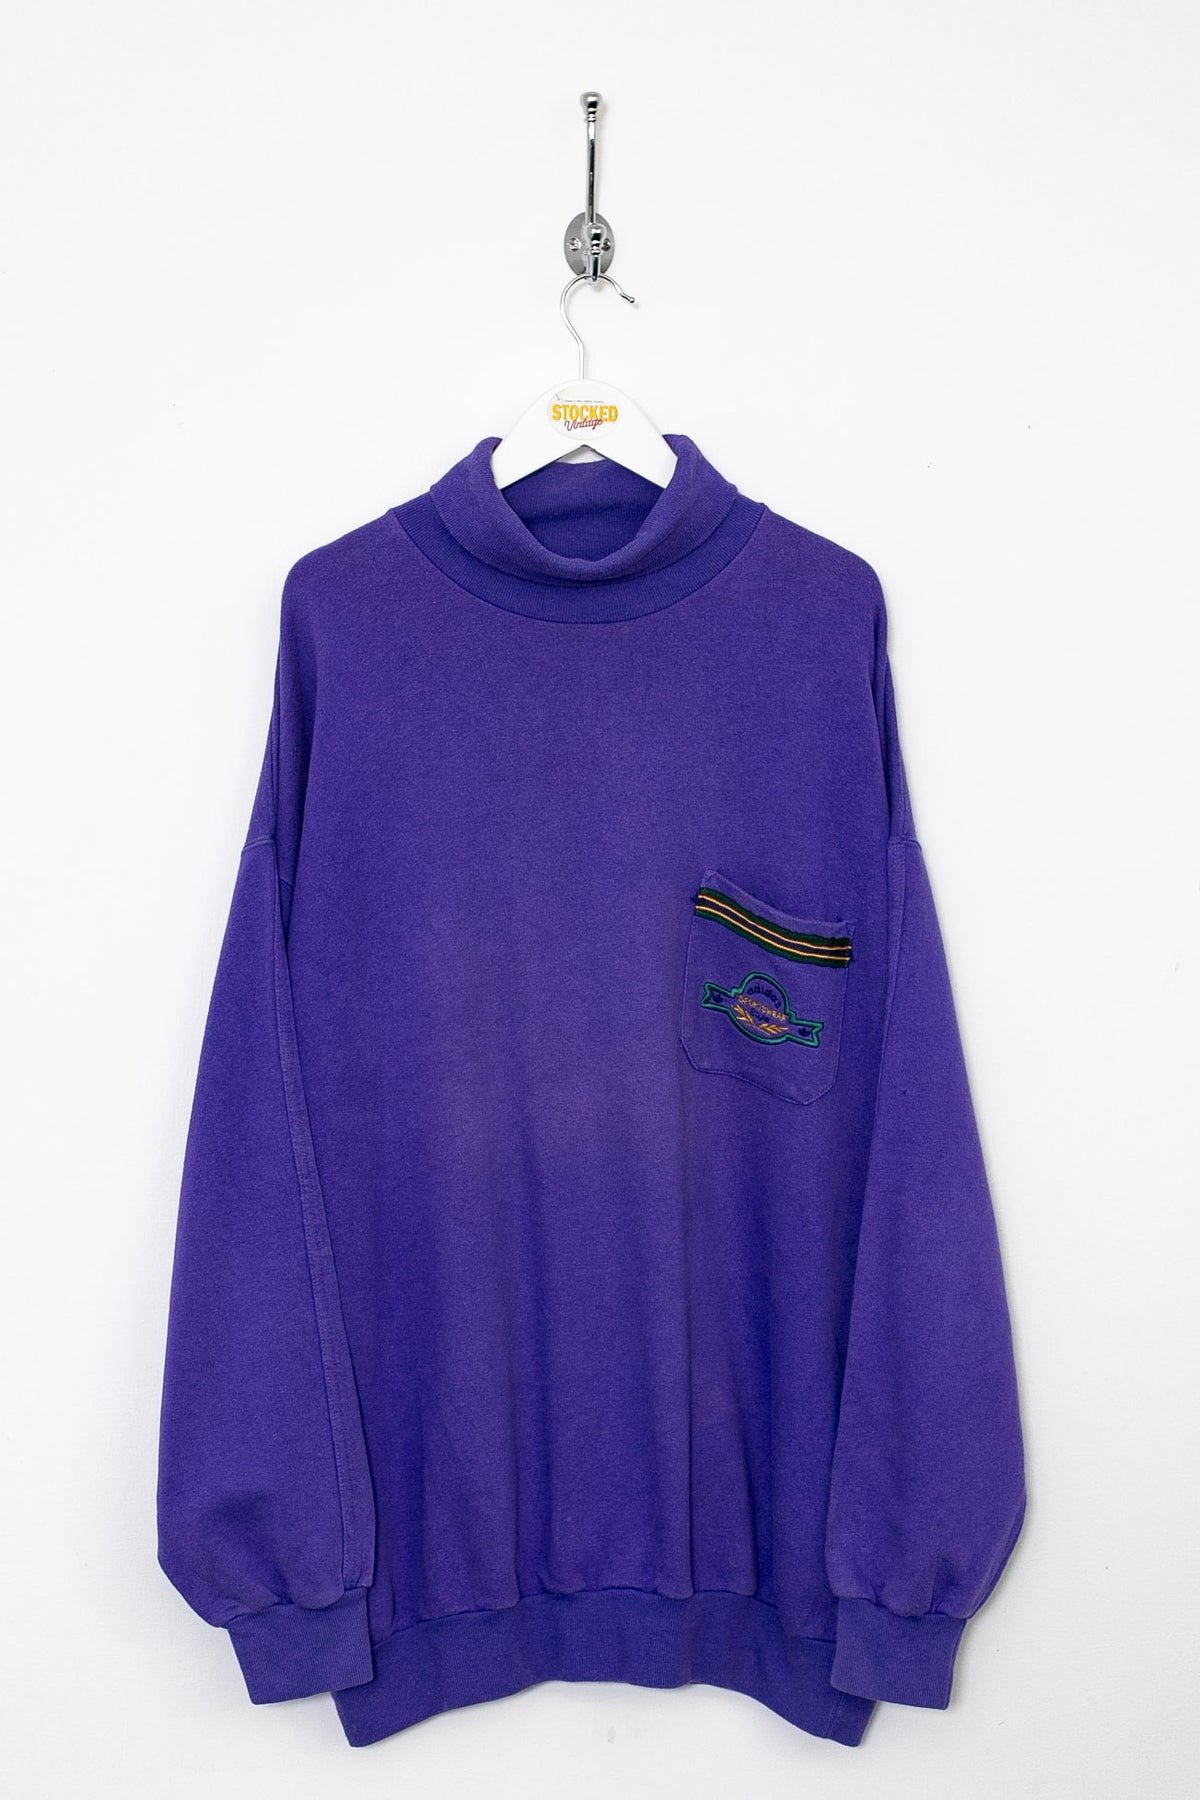 90s Adidas Turtle Neck Sweatshirt (XL)